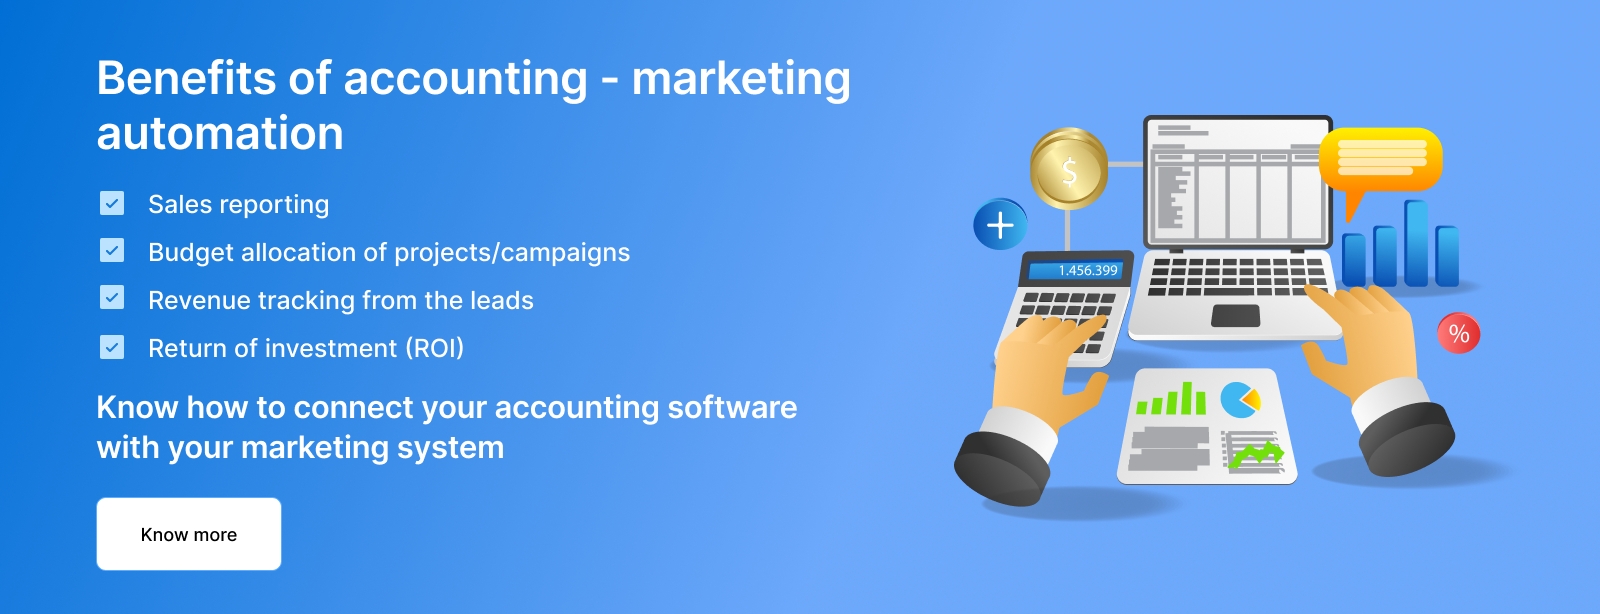 image-benefits-accounting.png